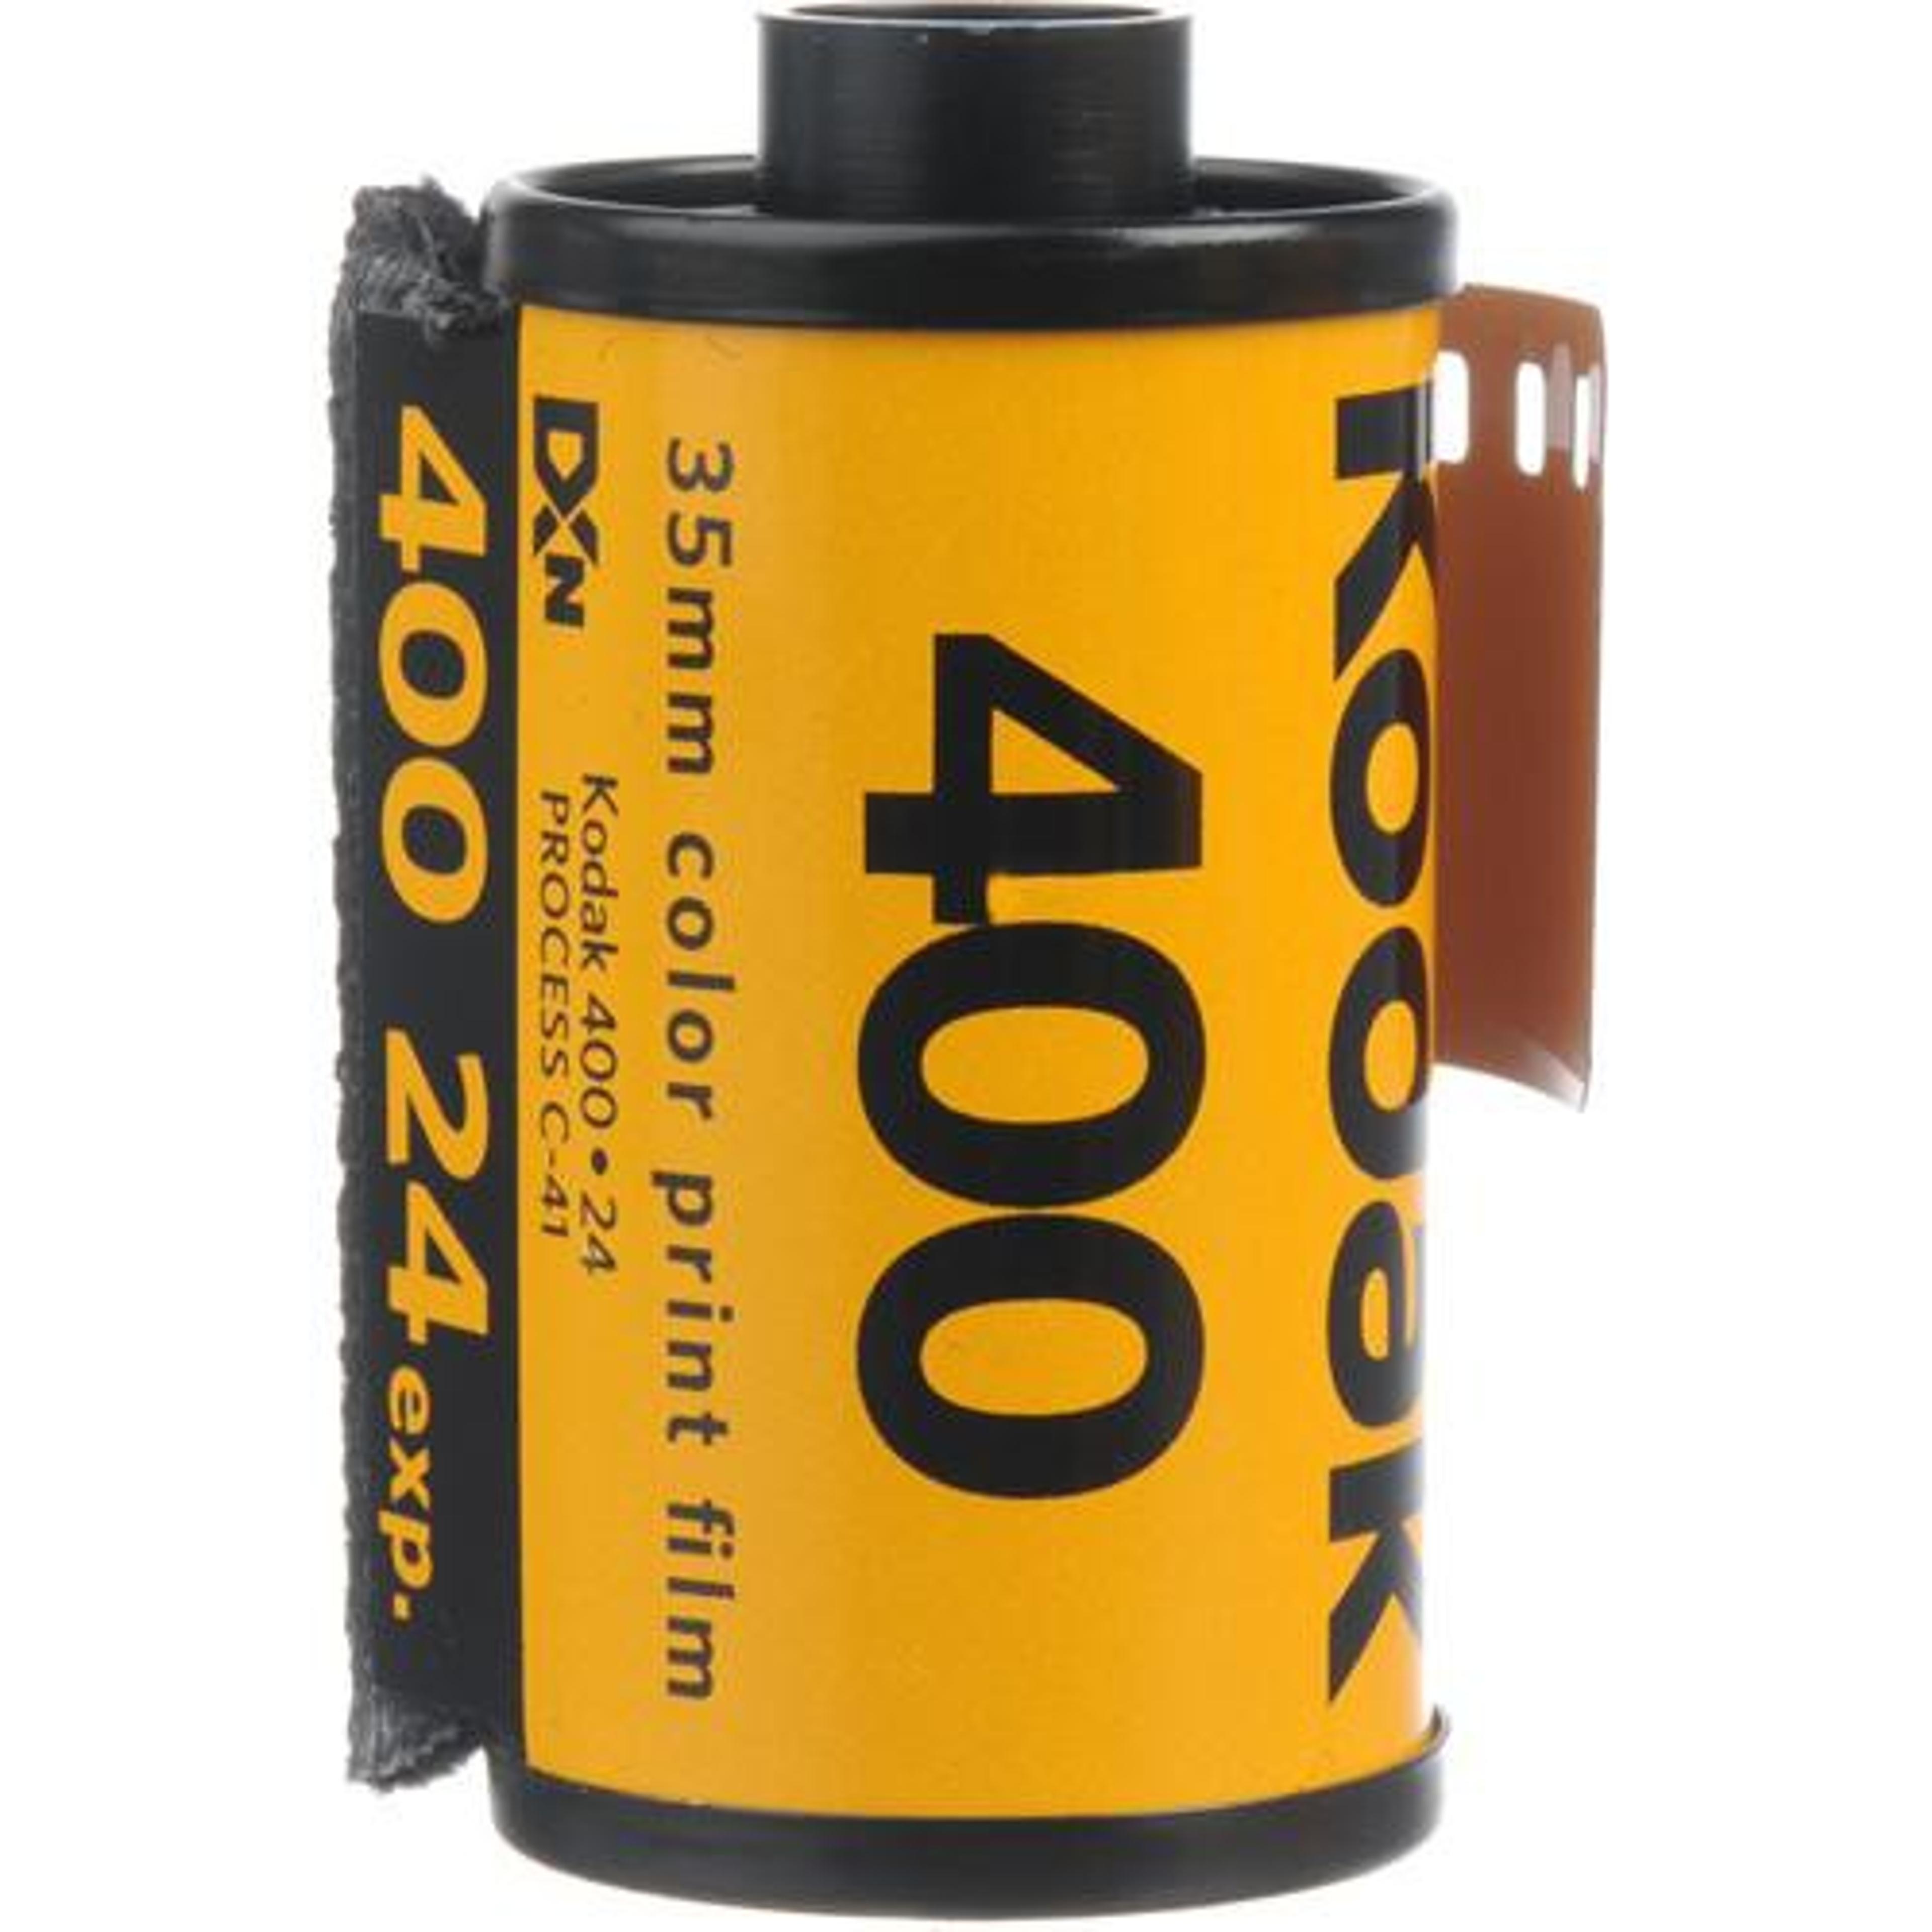 Kodak GC/UltraMax 400 Color Negative Film 6034029 B&H Photo Video